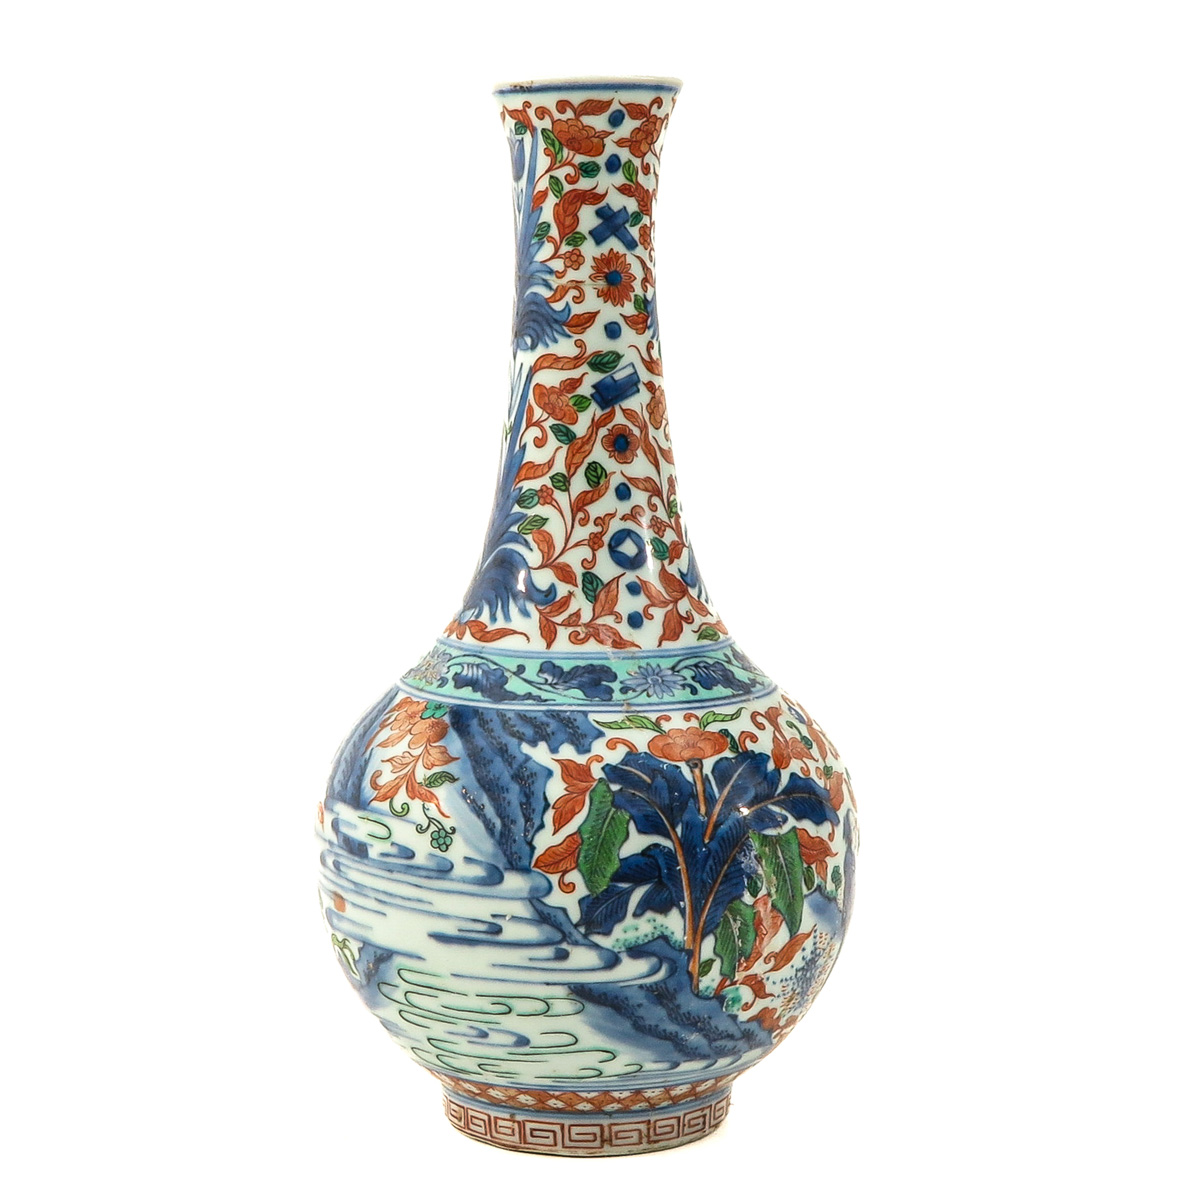 A Polychrome Decor Bottle Vase - Image 4 of 10